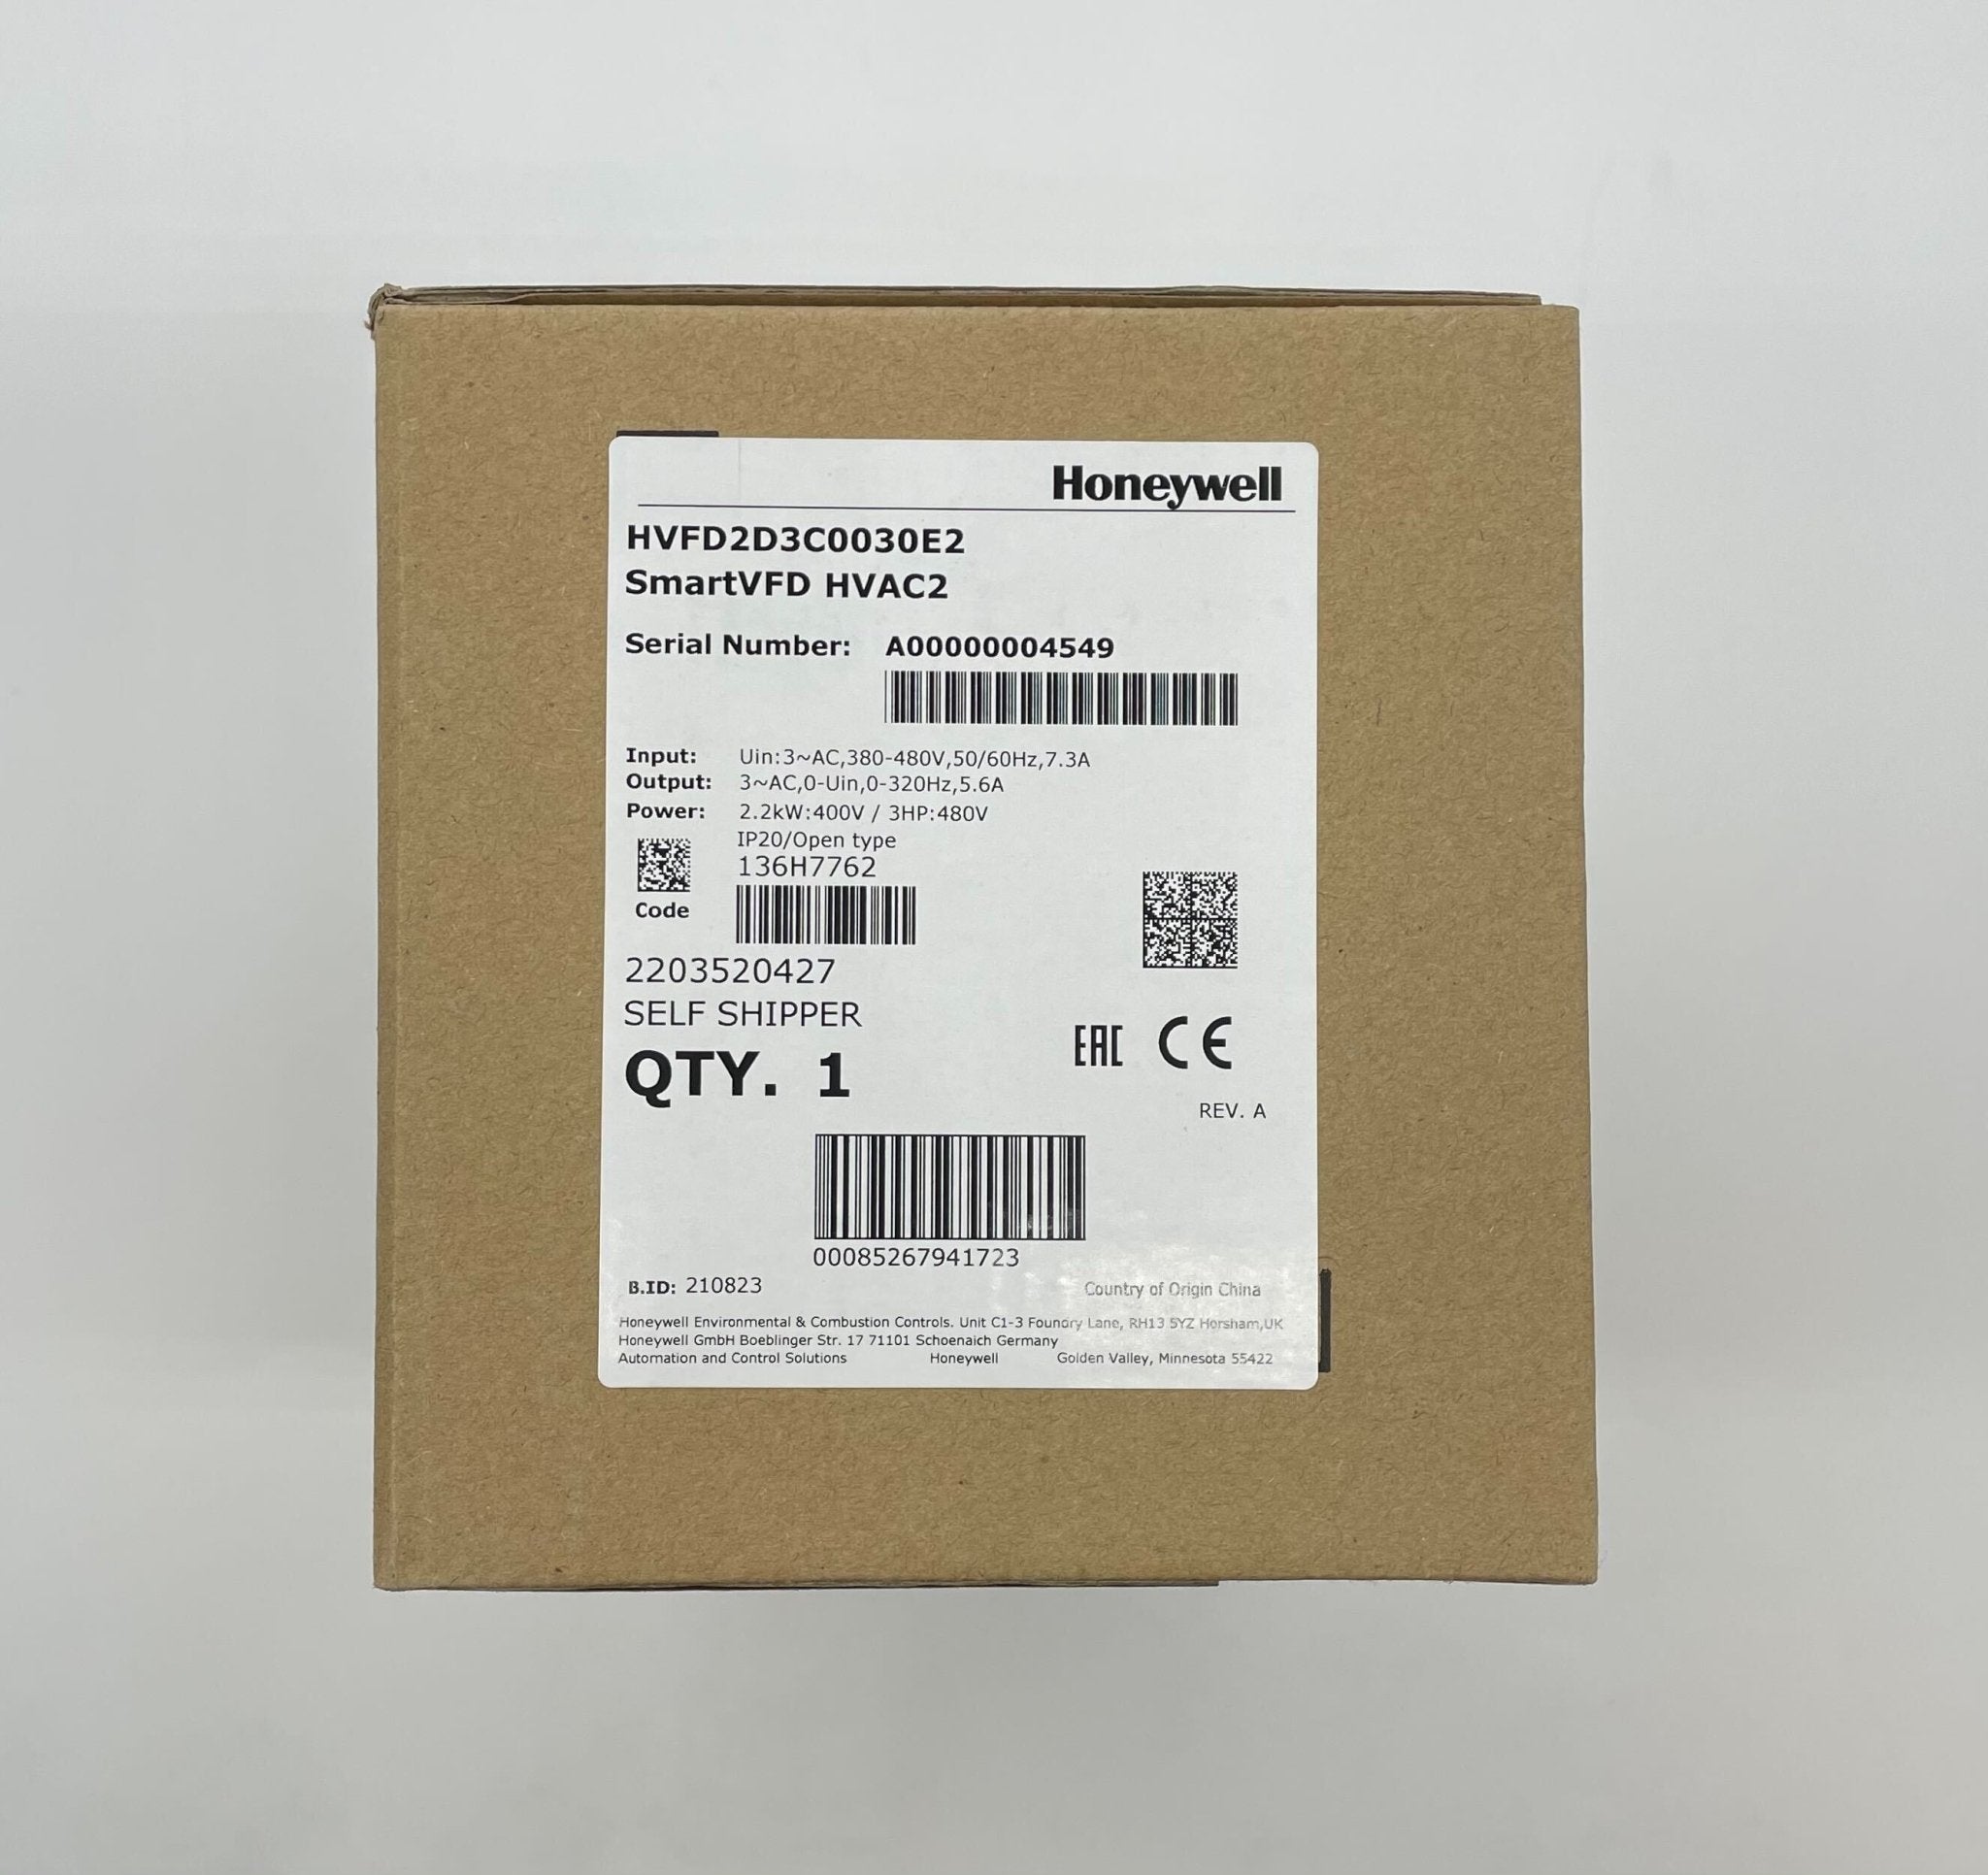 Honeywell HVFD2D3C0030E2 SMARTVFD2 3 HP 380-480V - The Fire Alarm Supplier